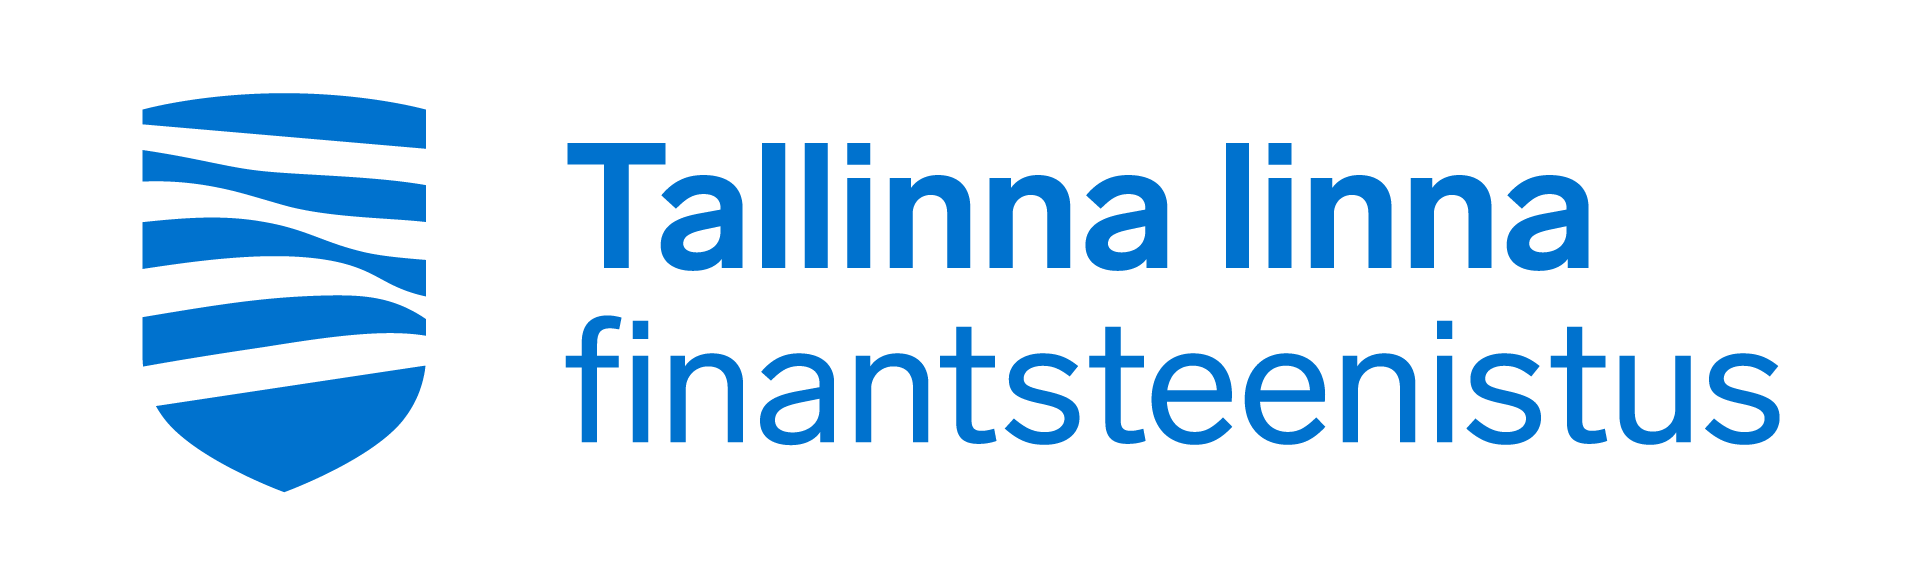 tallinna_linna_finantsteenistus_logo_rgb